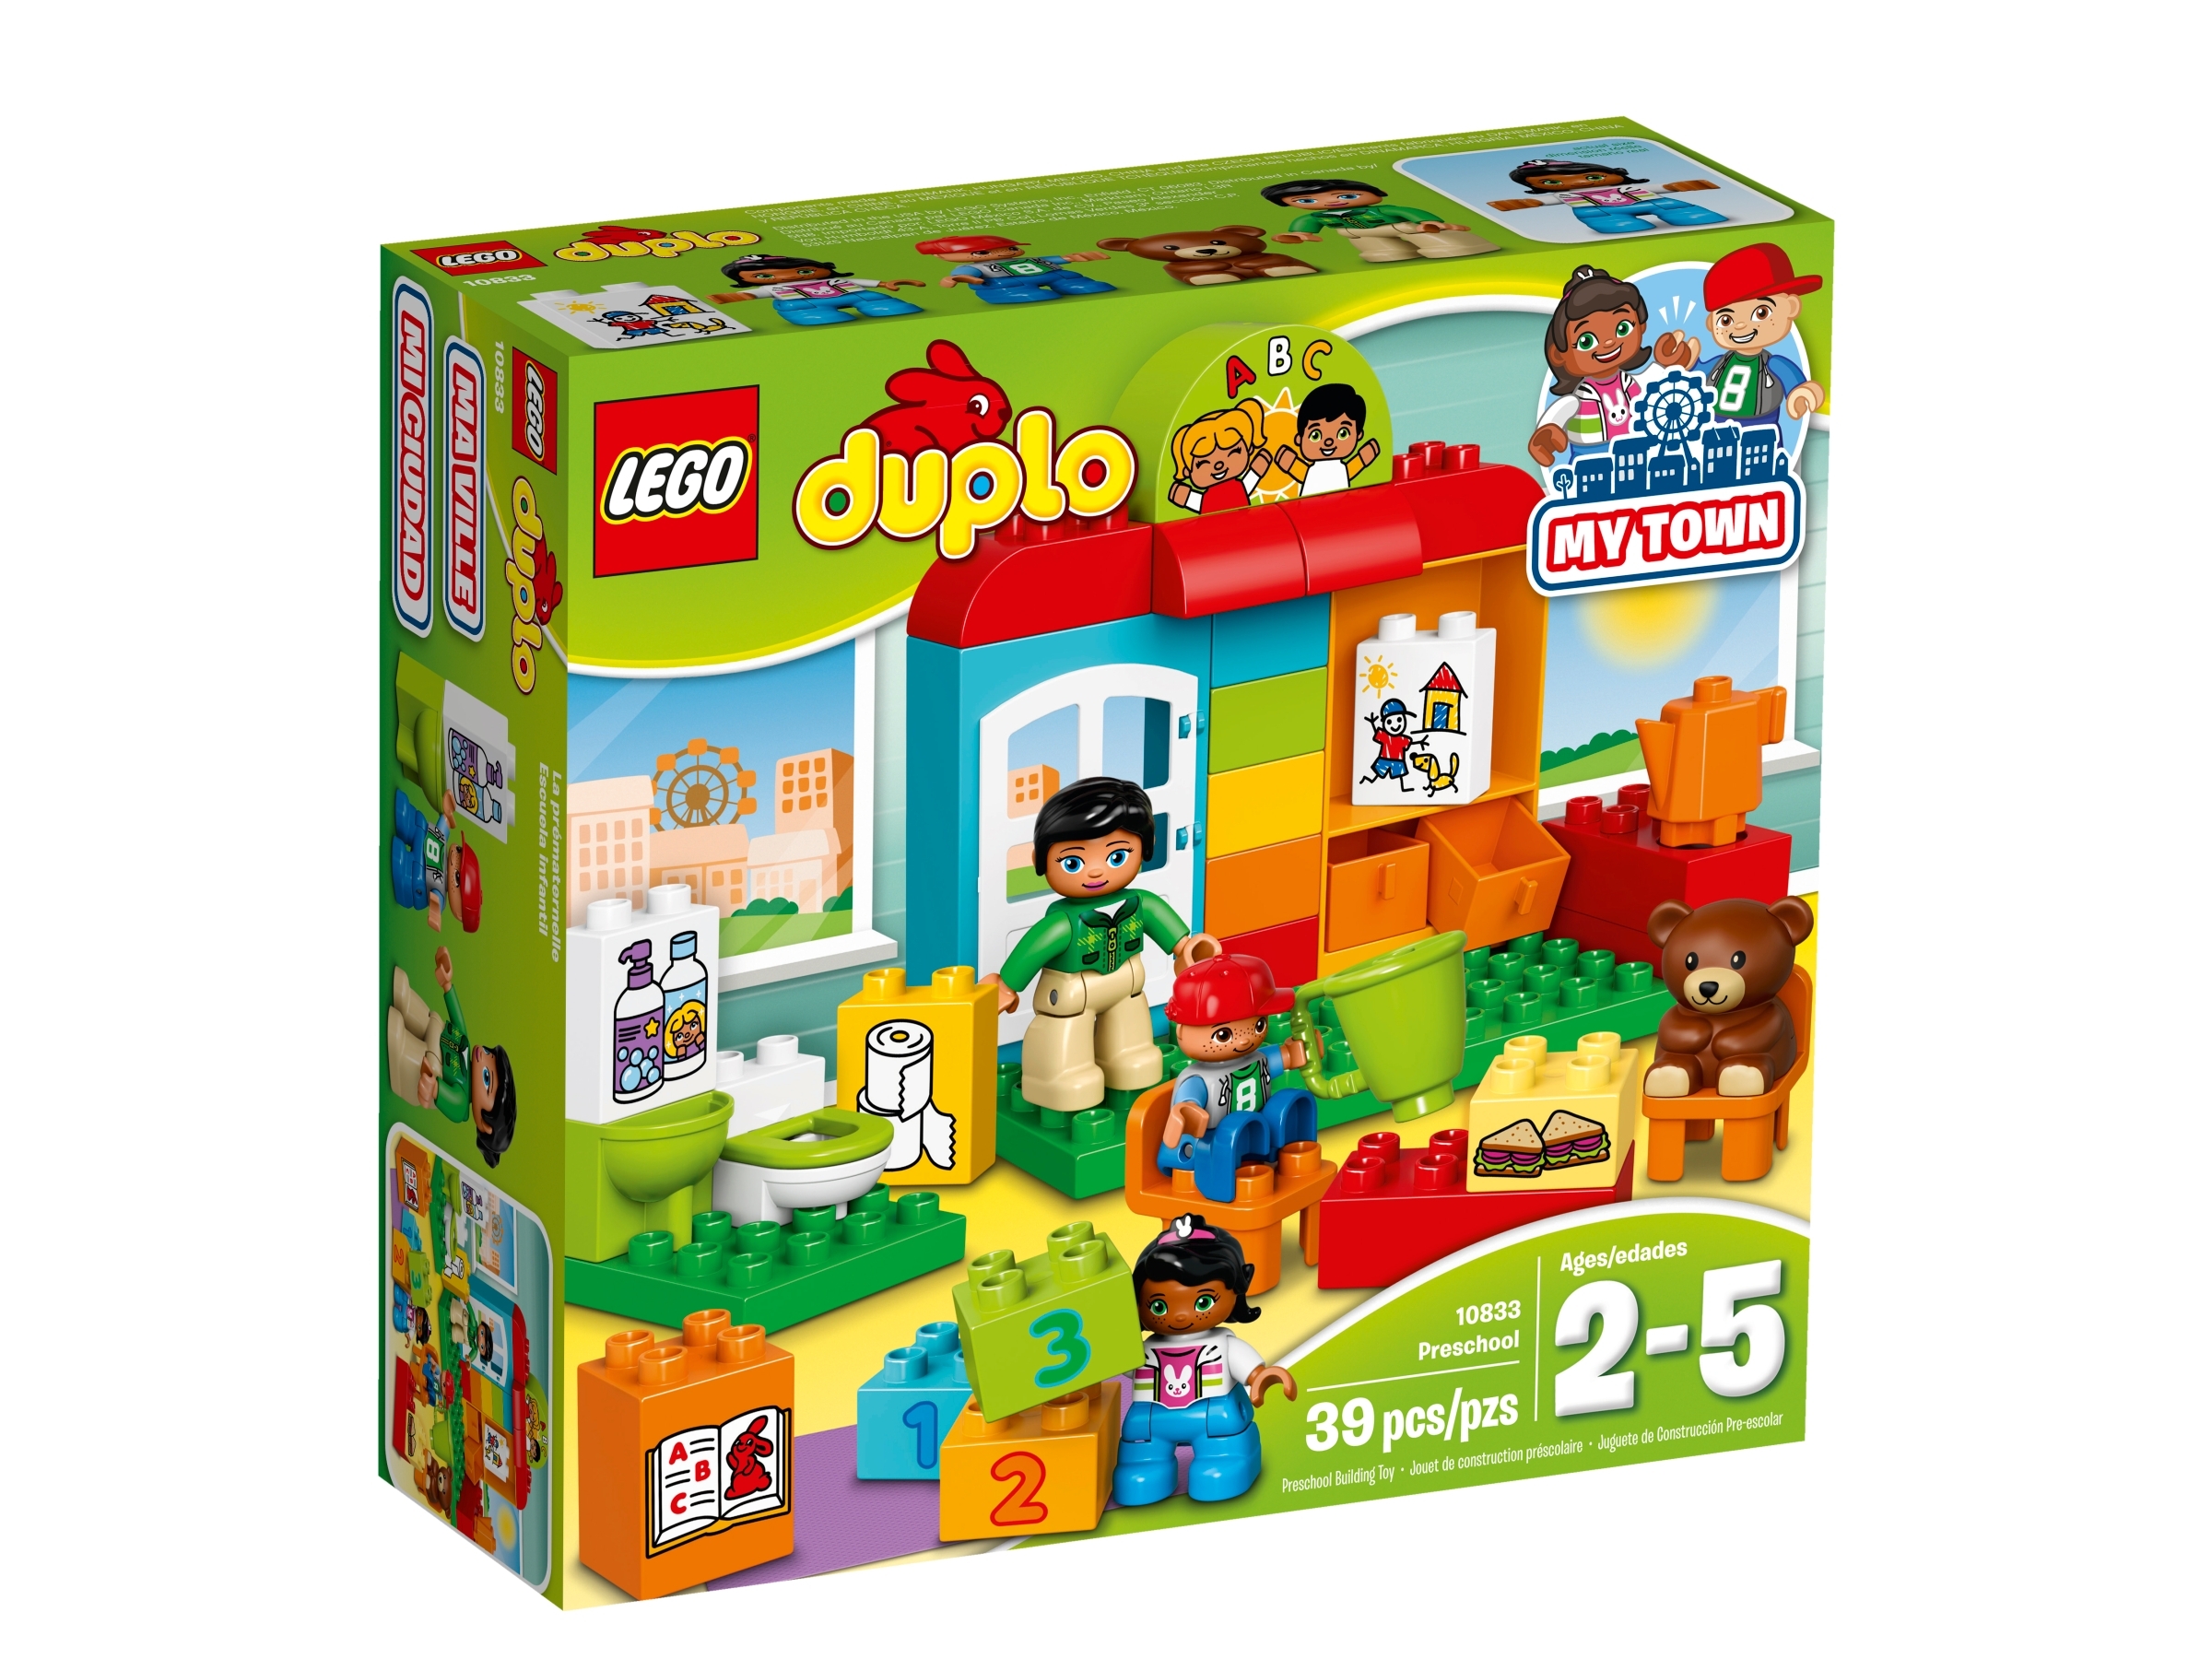 engel Vermeend Commandant Preschool 10833 | DUPLO® | Buy online at the Official LEGO® Shop US